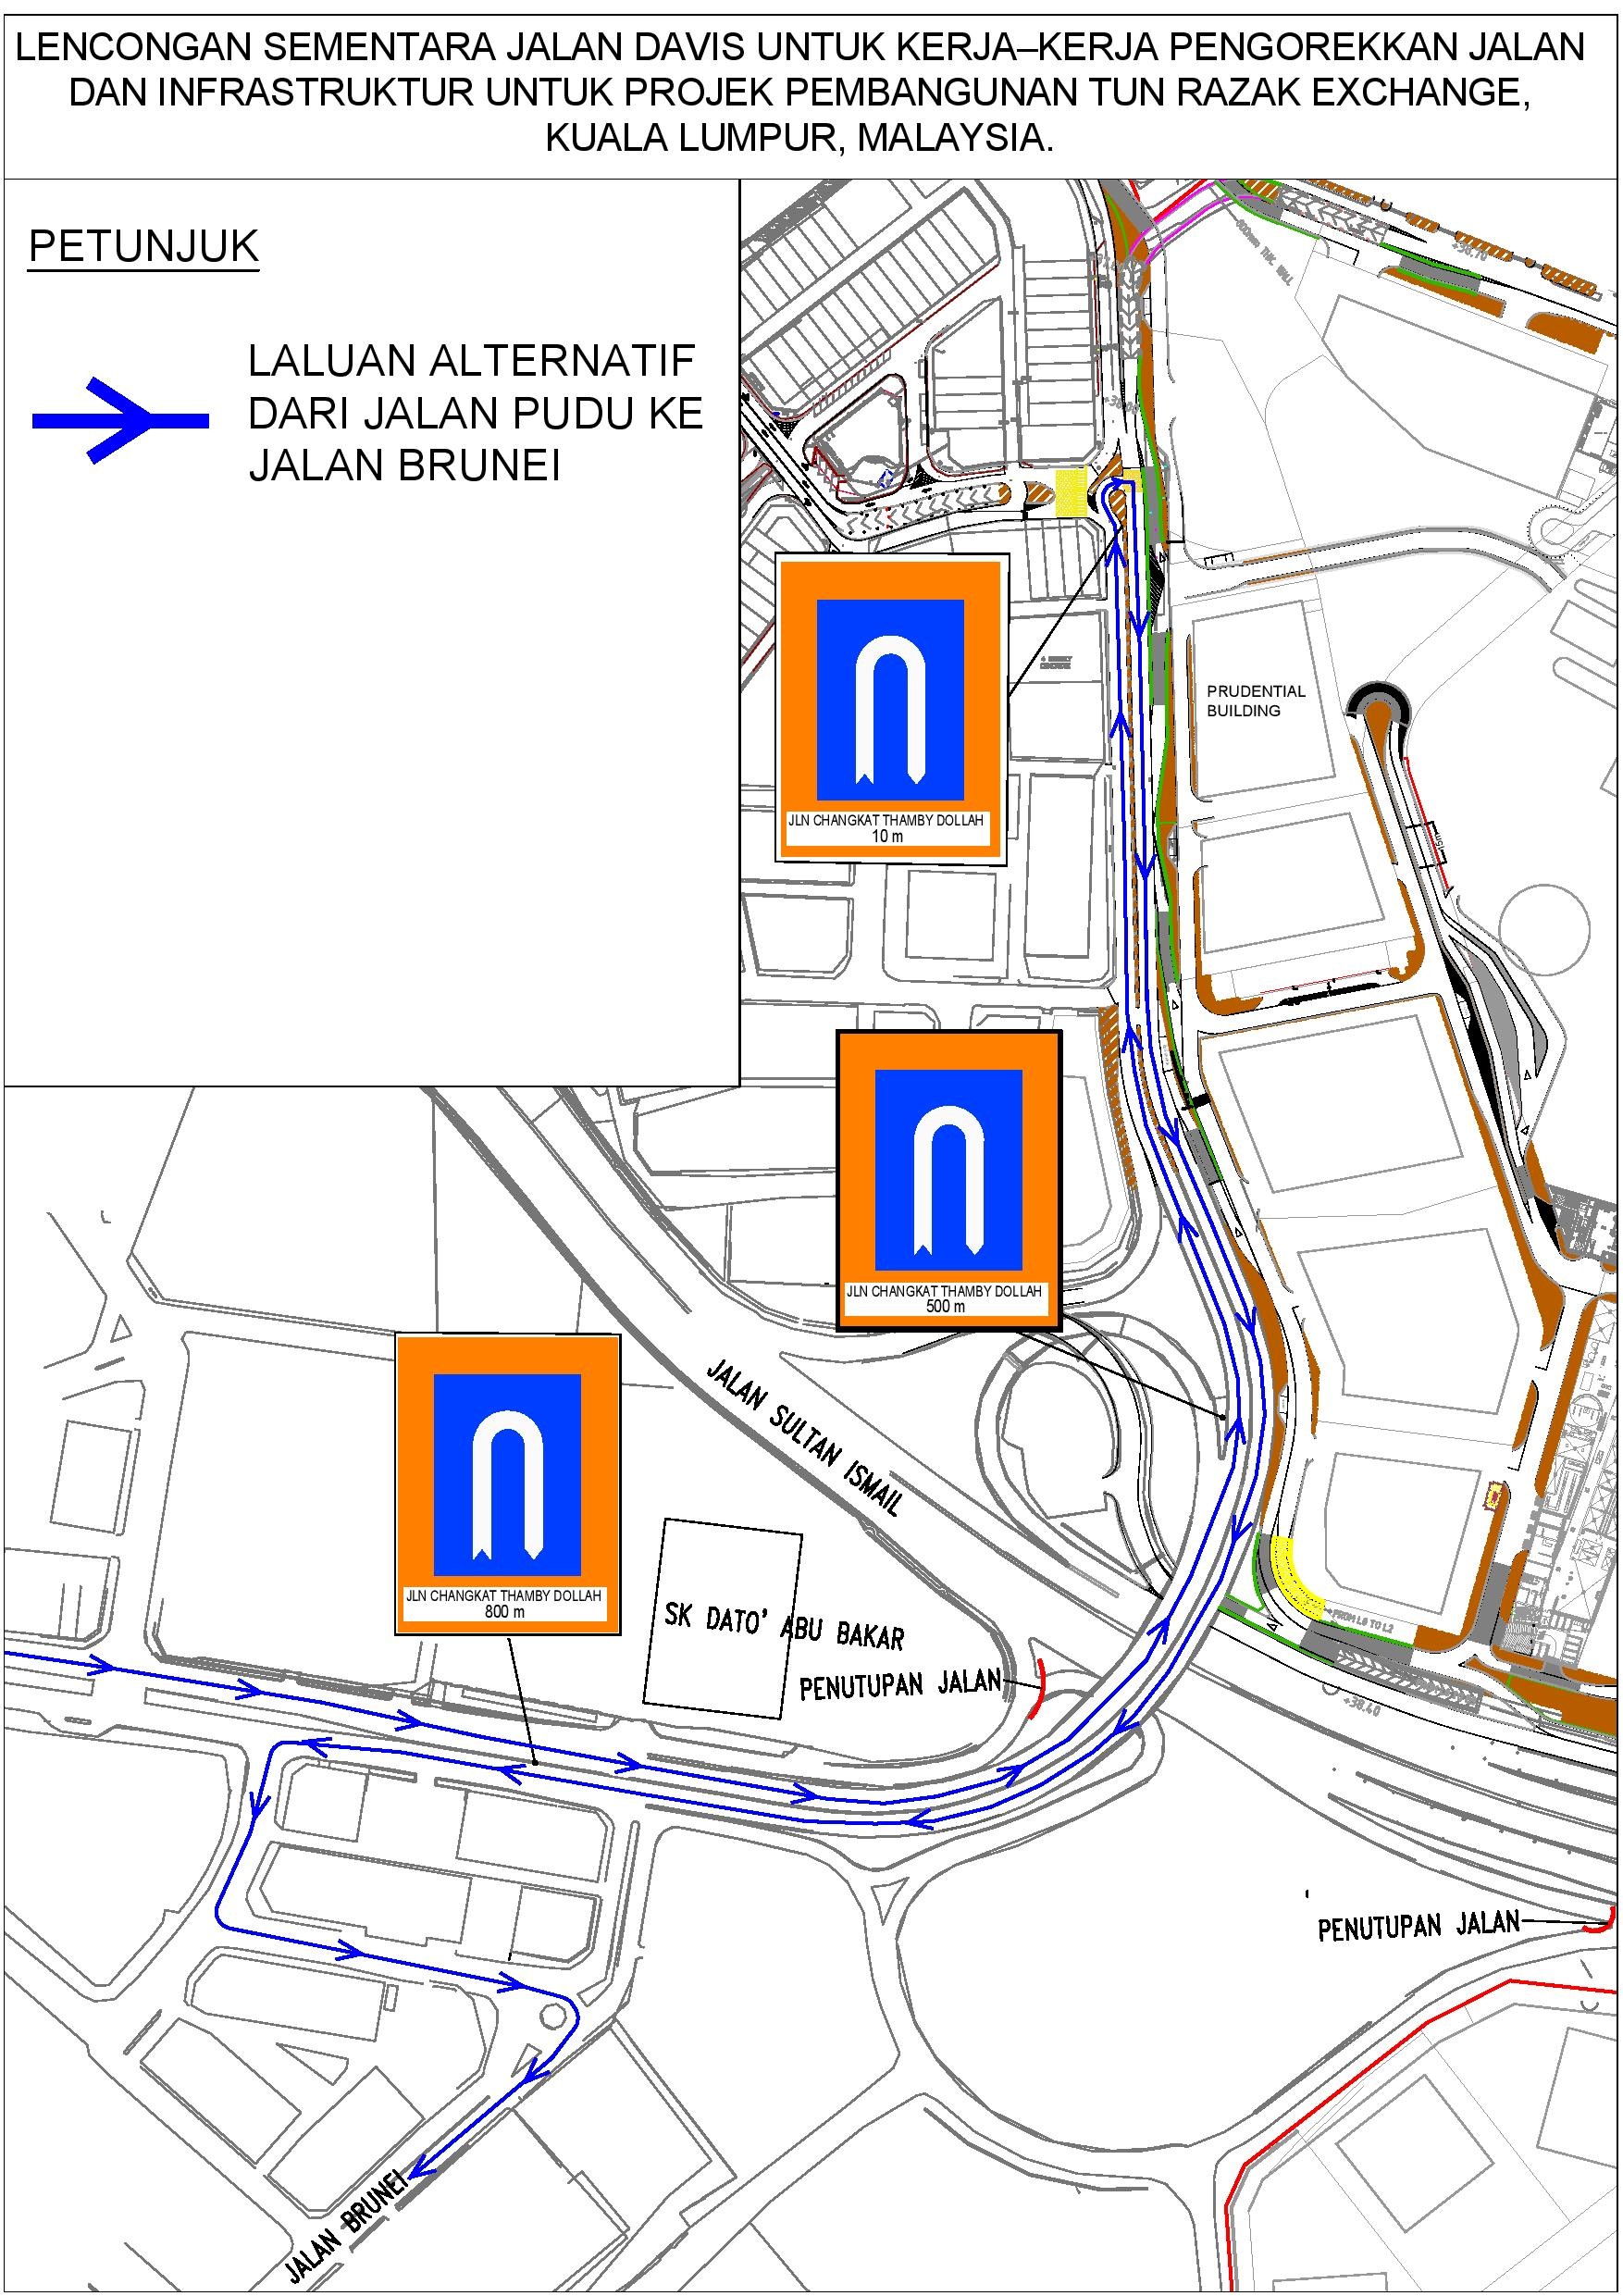 MAP 2- ALTERNATIVE ROUTE TO JALAN BRUNEI FROM JALAN PUDU